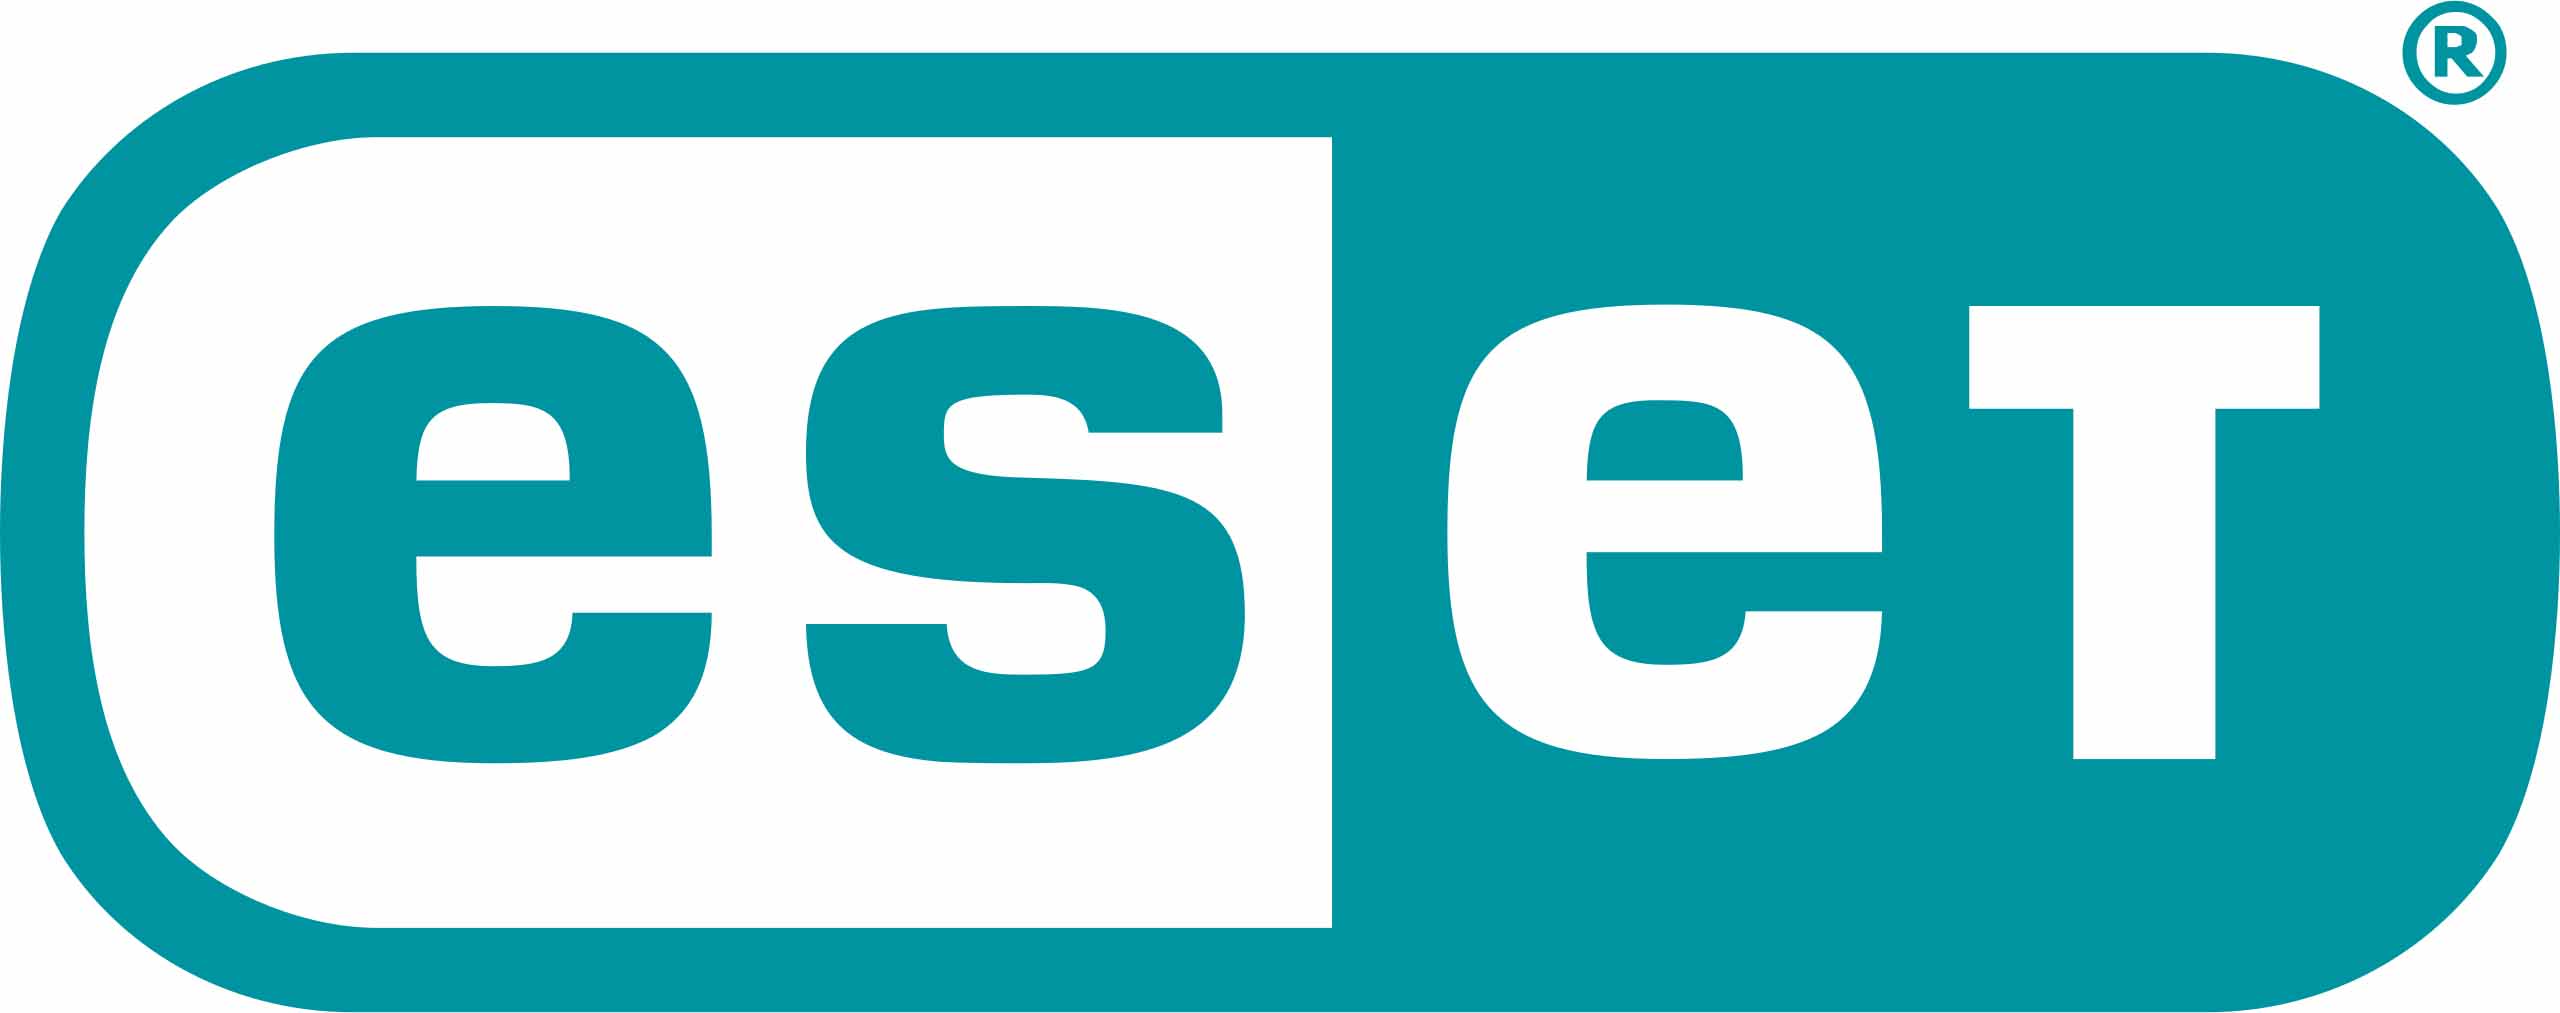 ESET logo ransomware webinar